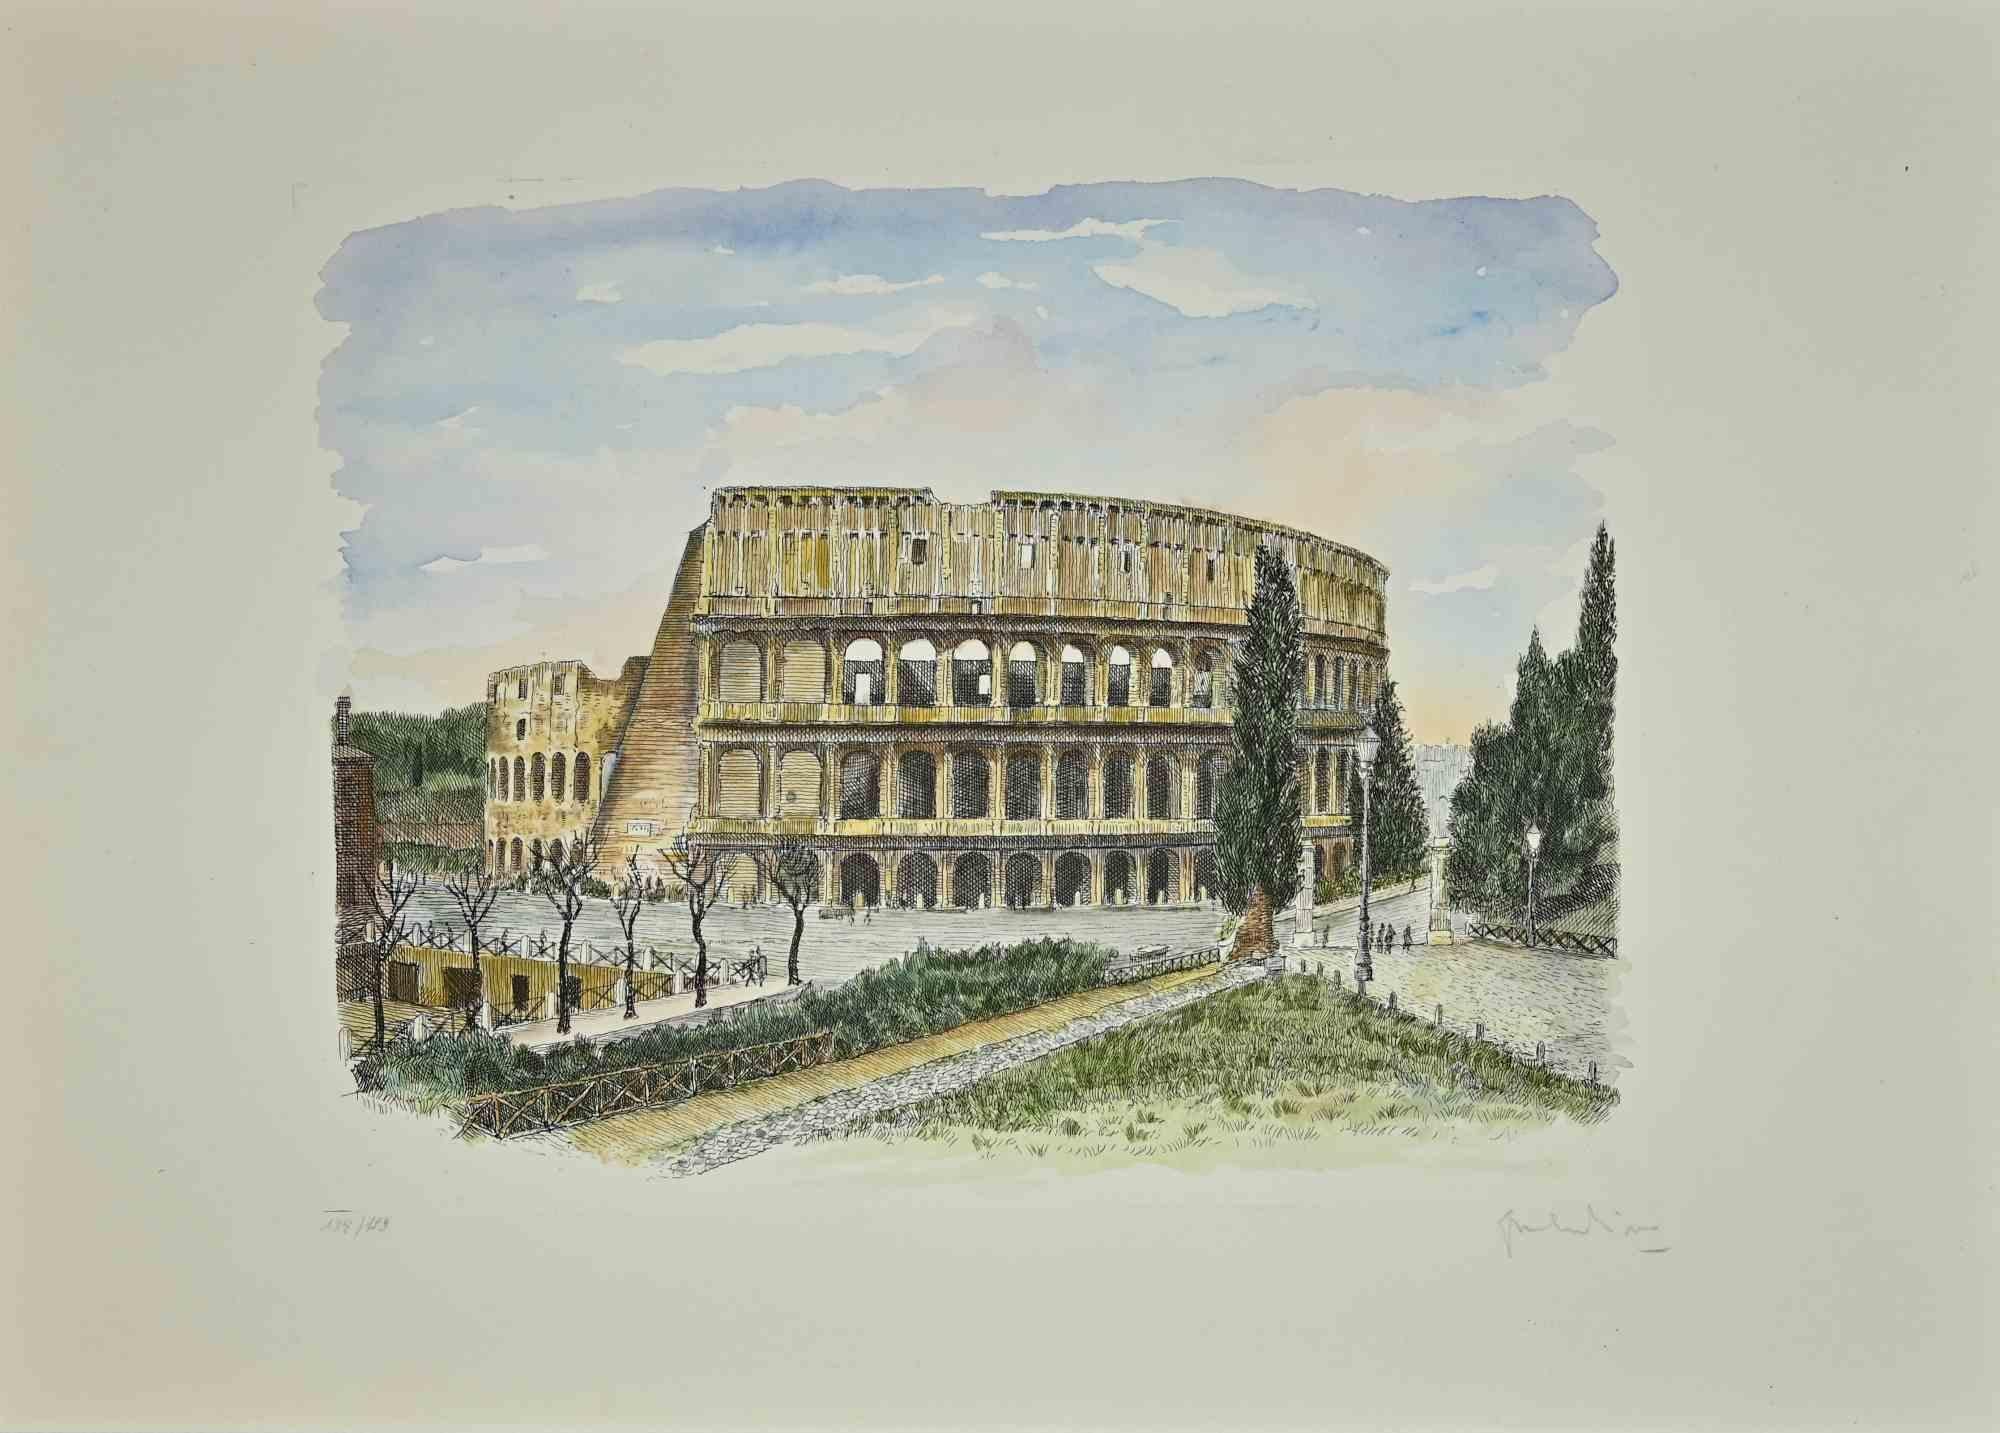 Colosseum - Etching by Giuseppe Malandrino - 1970s